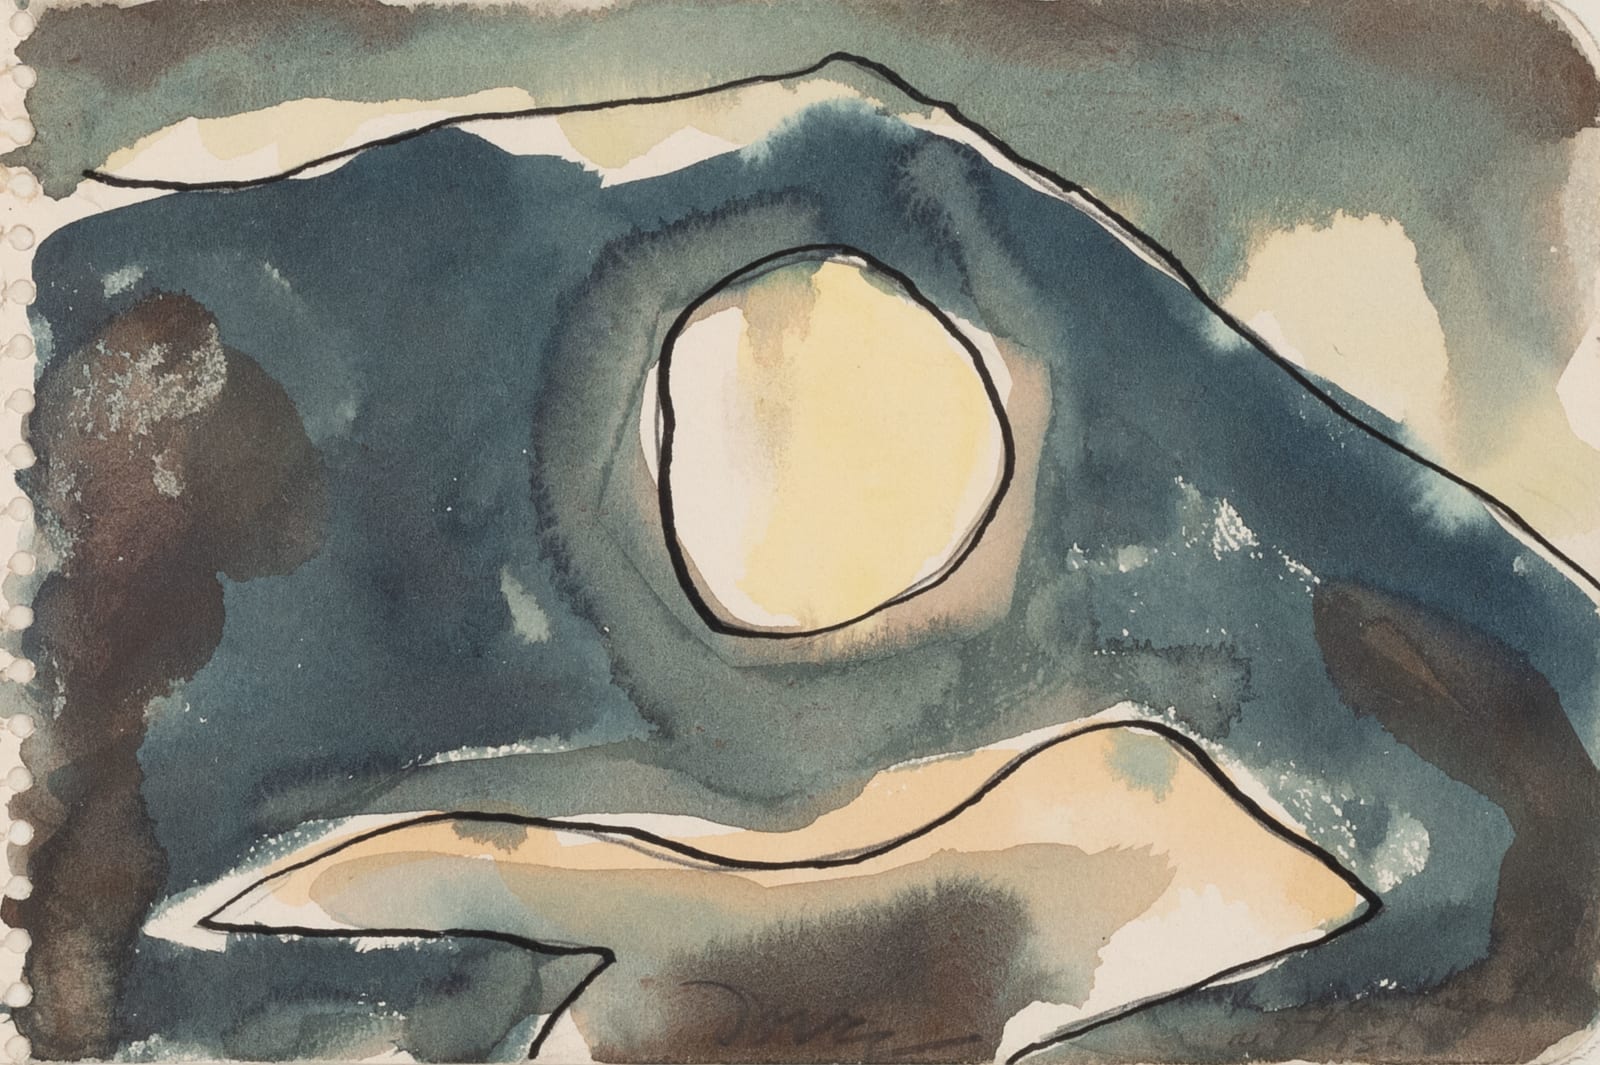 Arthur Dove, Untitled, c. 1940–41